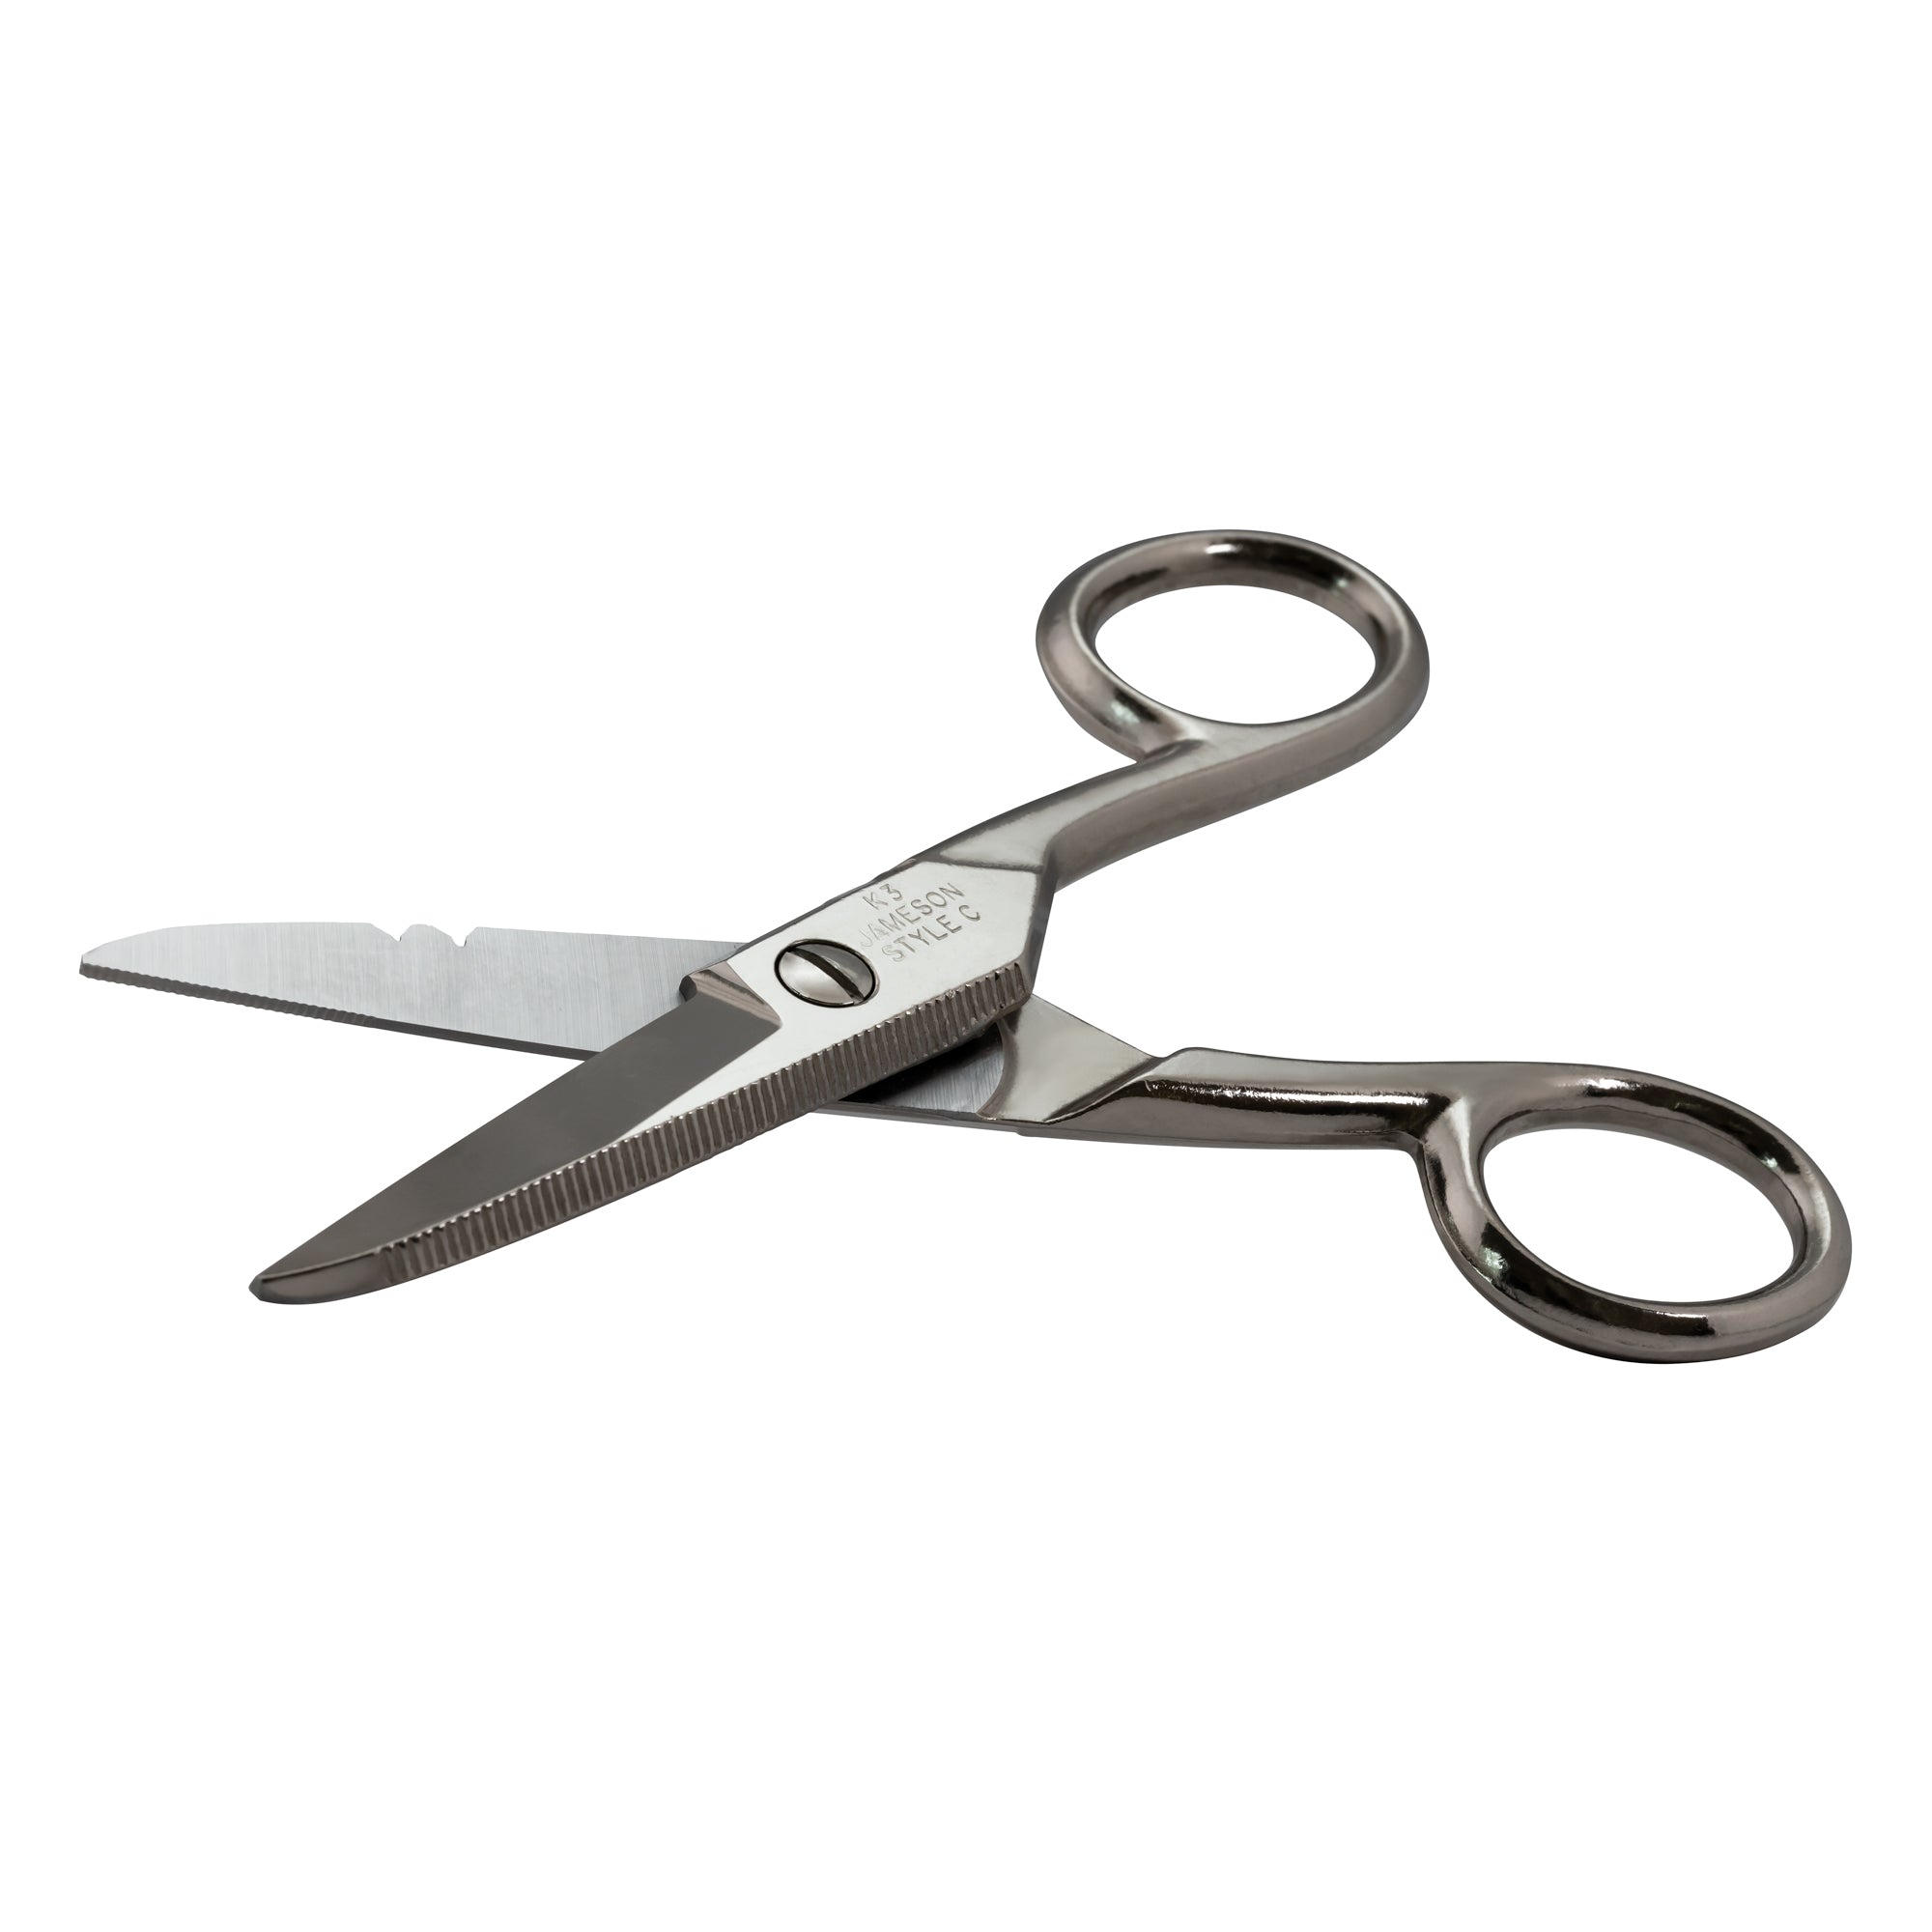 Universal Economy Scissors, 8 Length, Bent Handle, Stainless Steel, Black